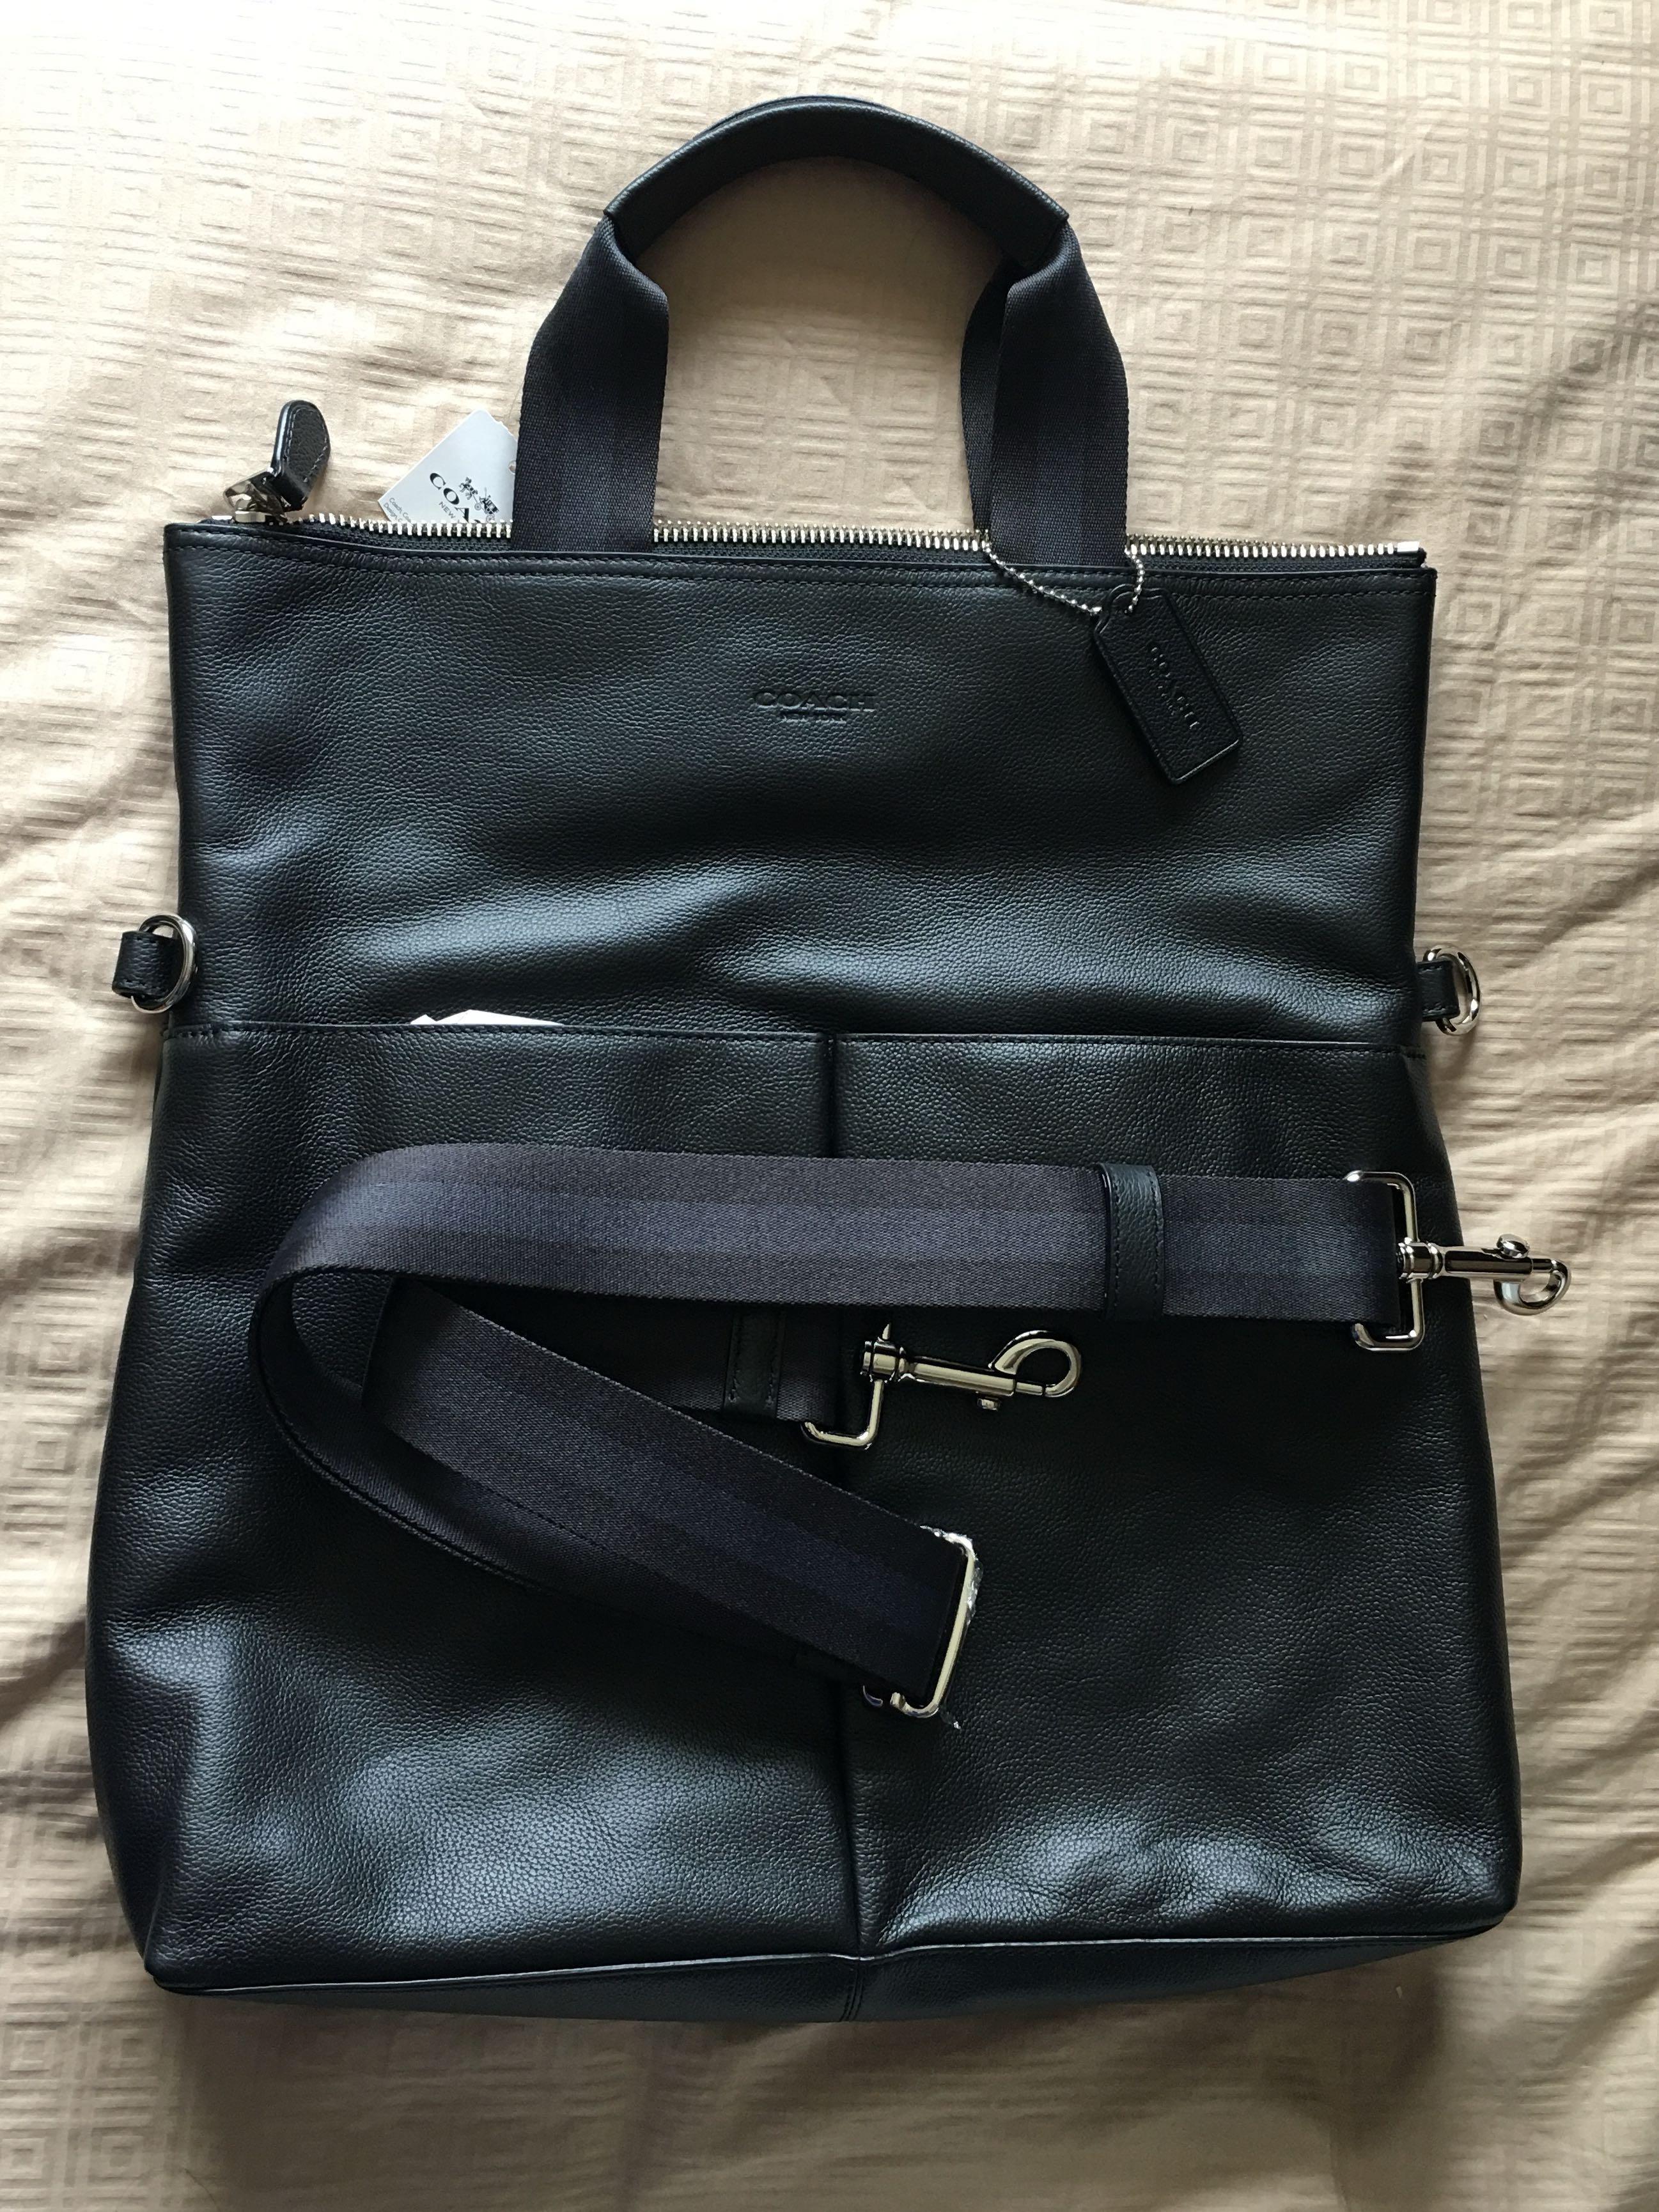 Coach Men Foldable Tote cum Sling Leather Bag in Black, Men's Fashion ...